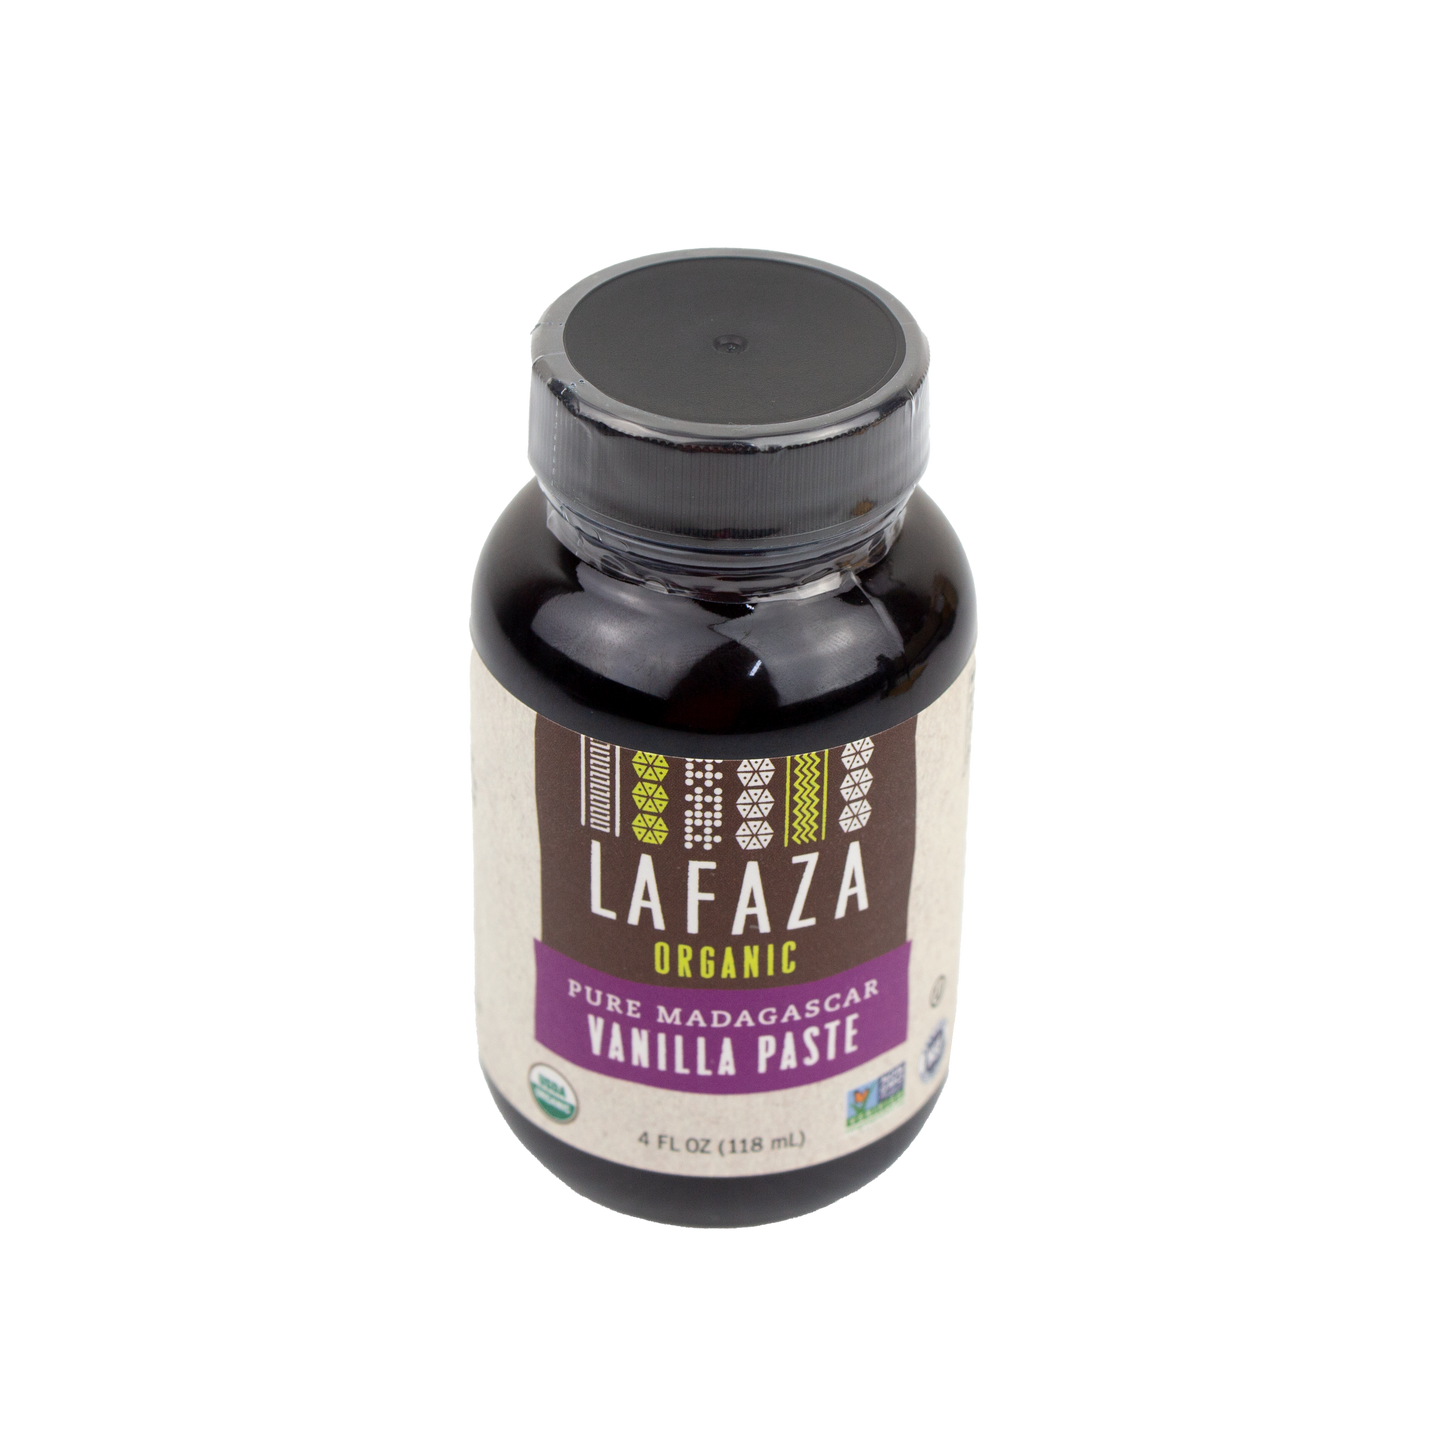 Lafaza Organic - Pure Madagascar Vanilla Paste